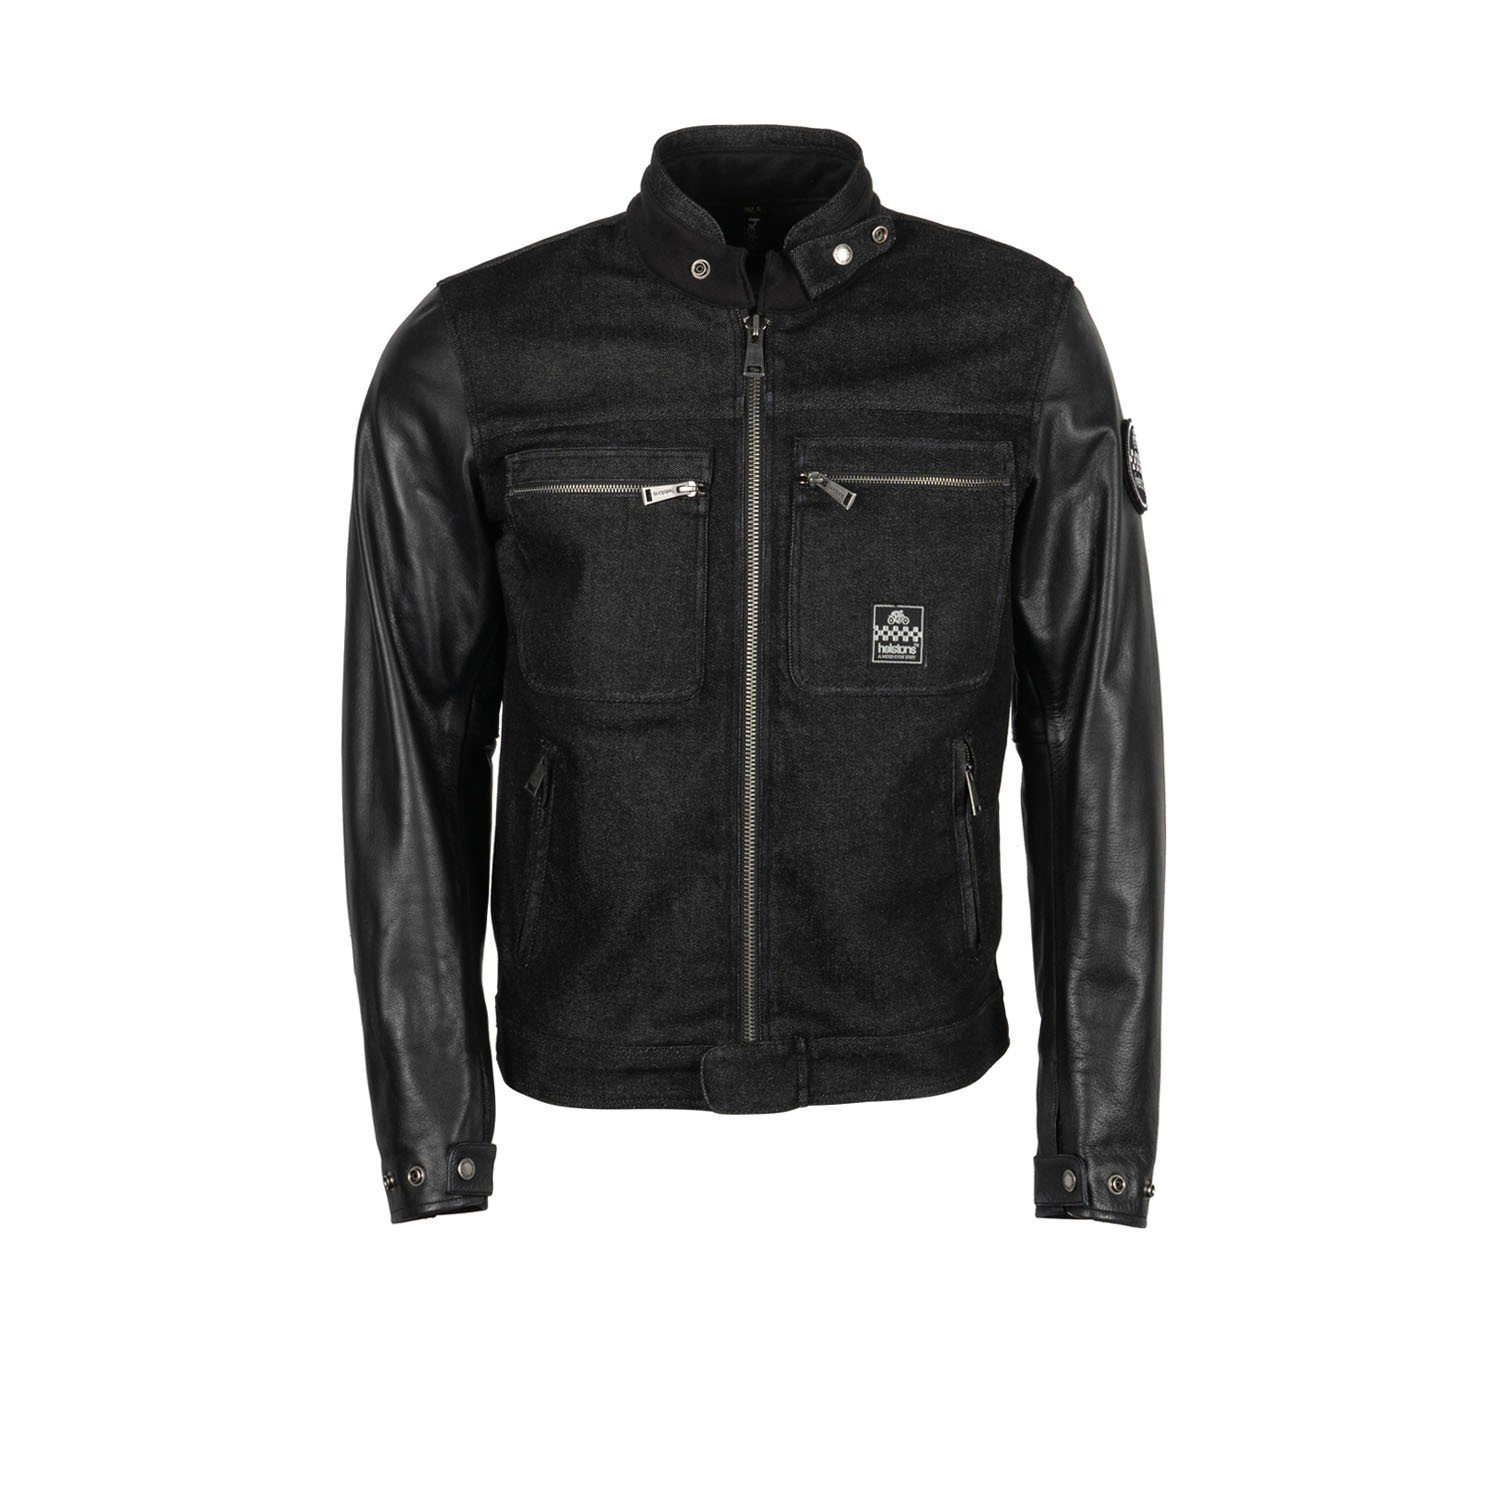 Image of Helstons Winston Canvas Cotton Leather Jacket Black Size M ID 3662136084056